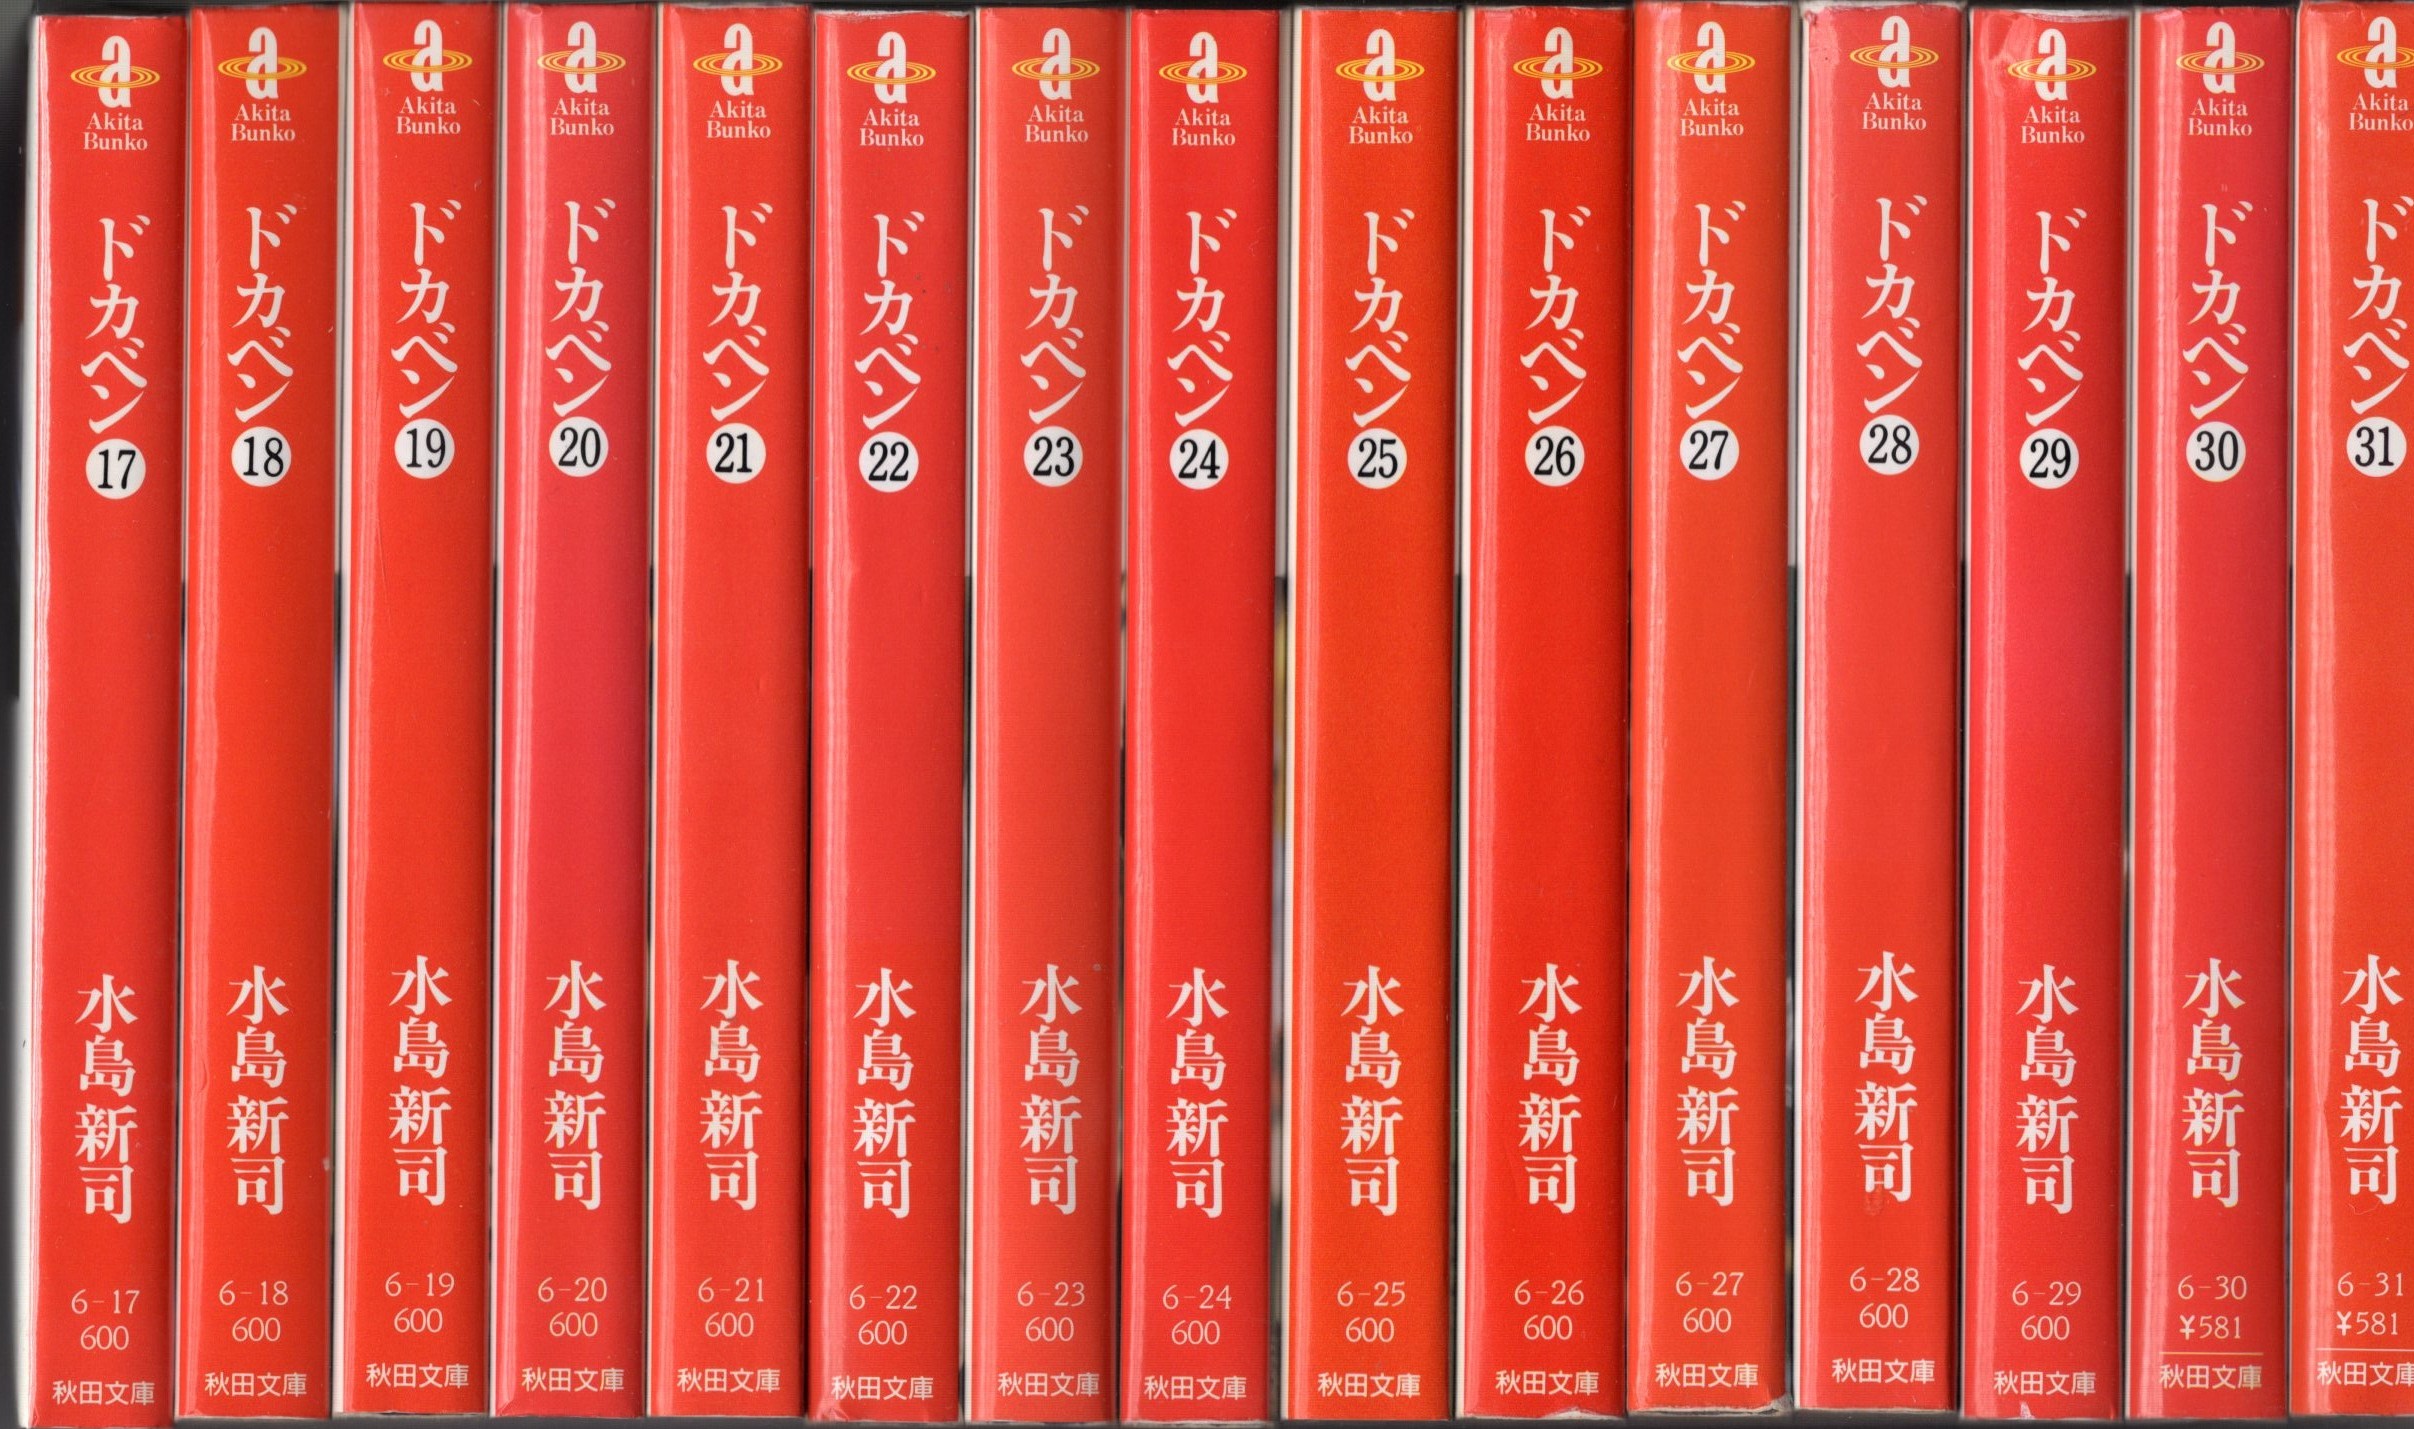 全31巻愛蔵版『ドカベン』全21巻『大甲子園』全10巻完結セット水島新司